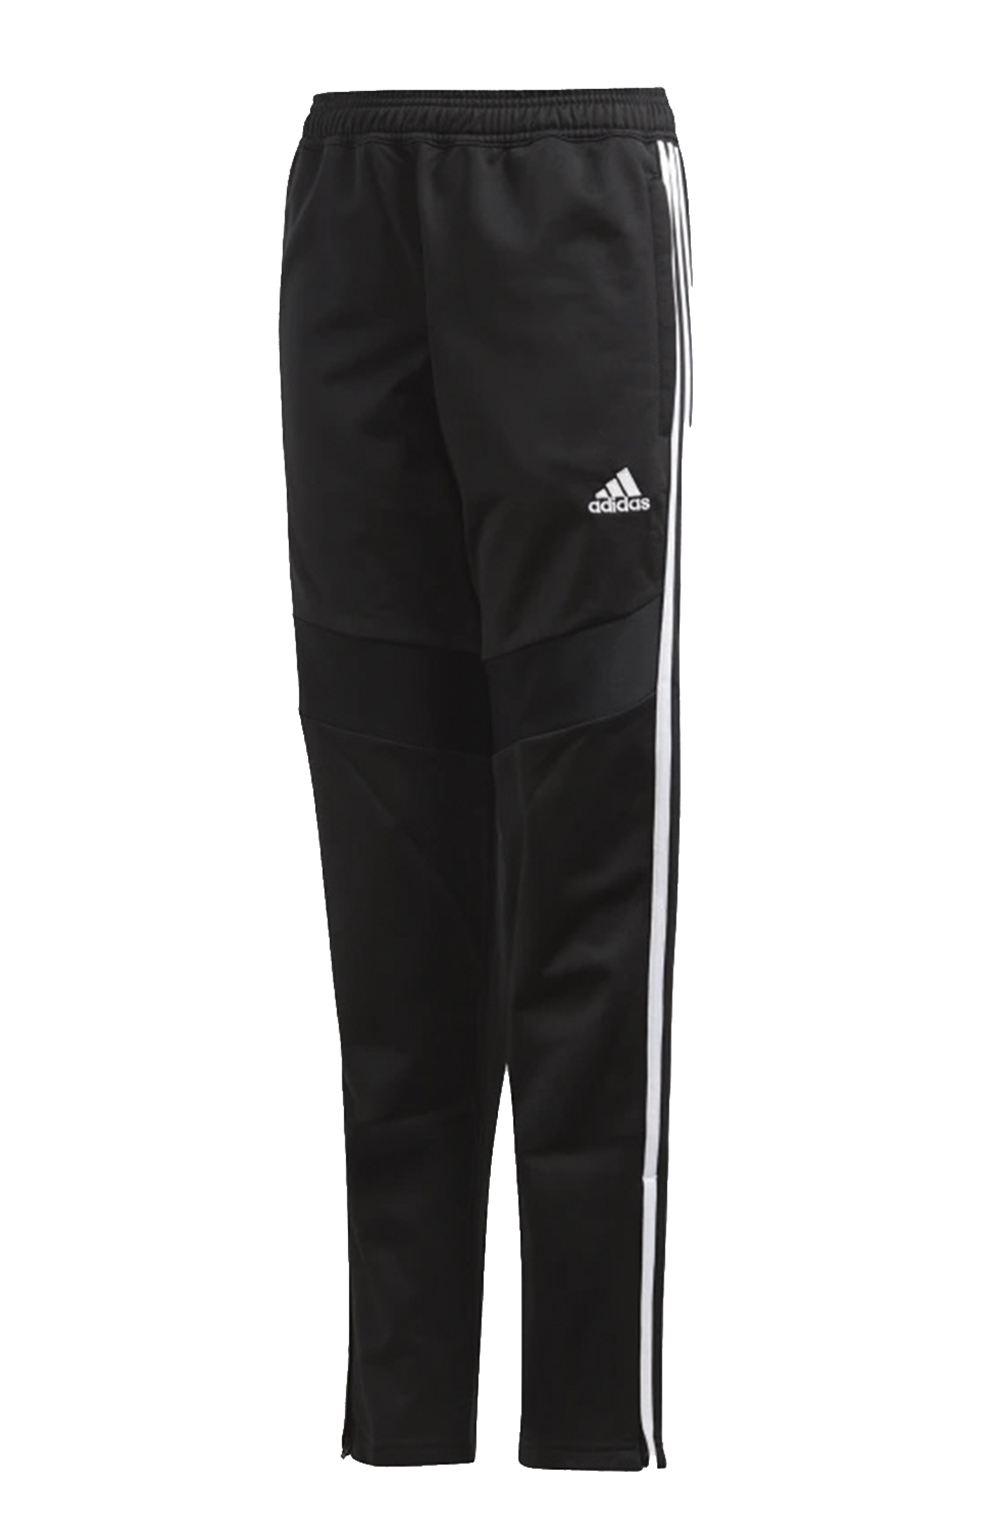 Junior de pantalones de Tiro 19 Poli BTS colore negro blanco - Adidas -